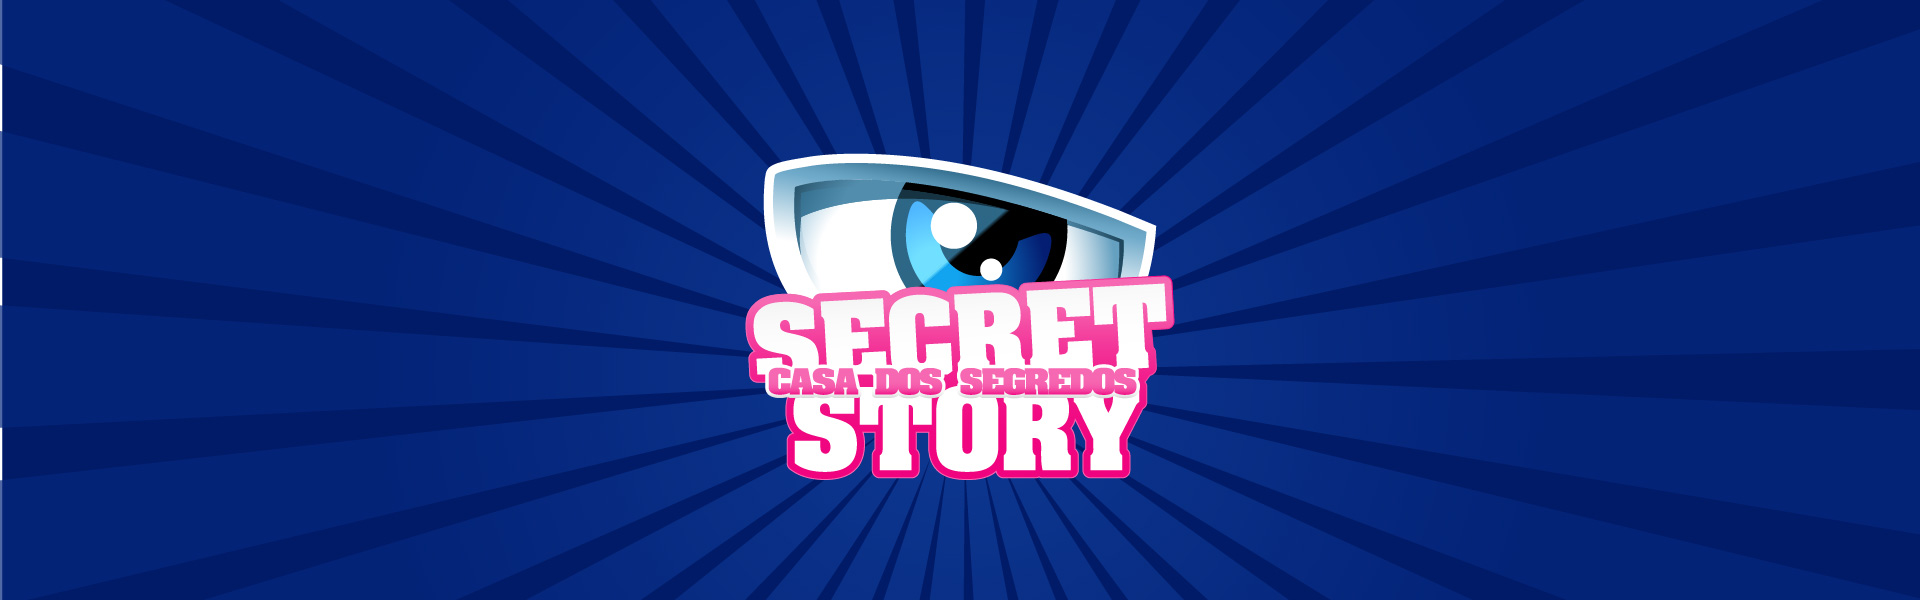 secret story app company